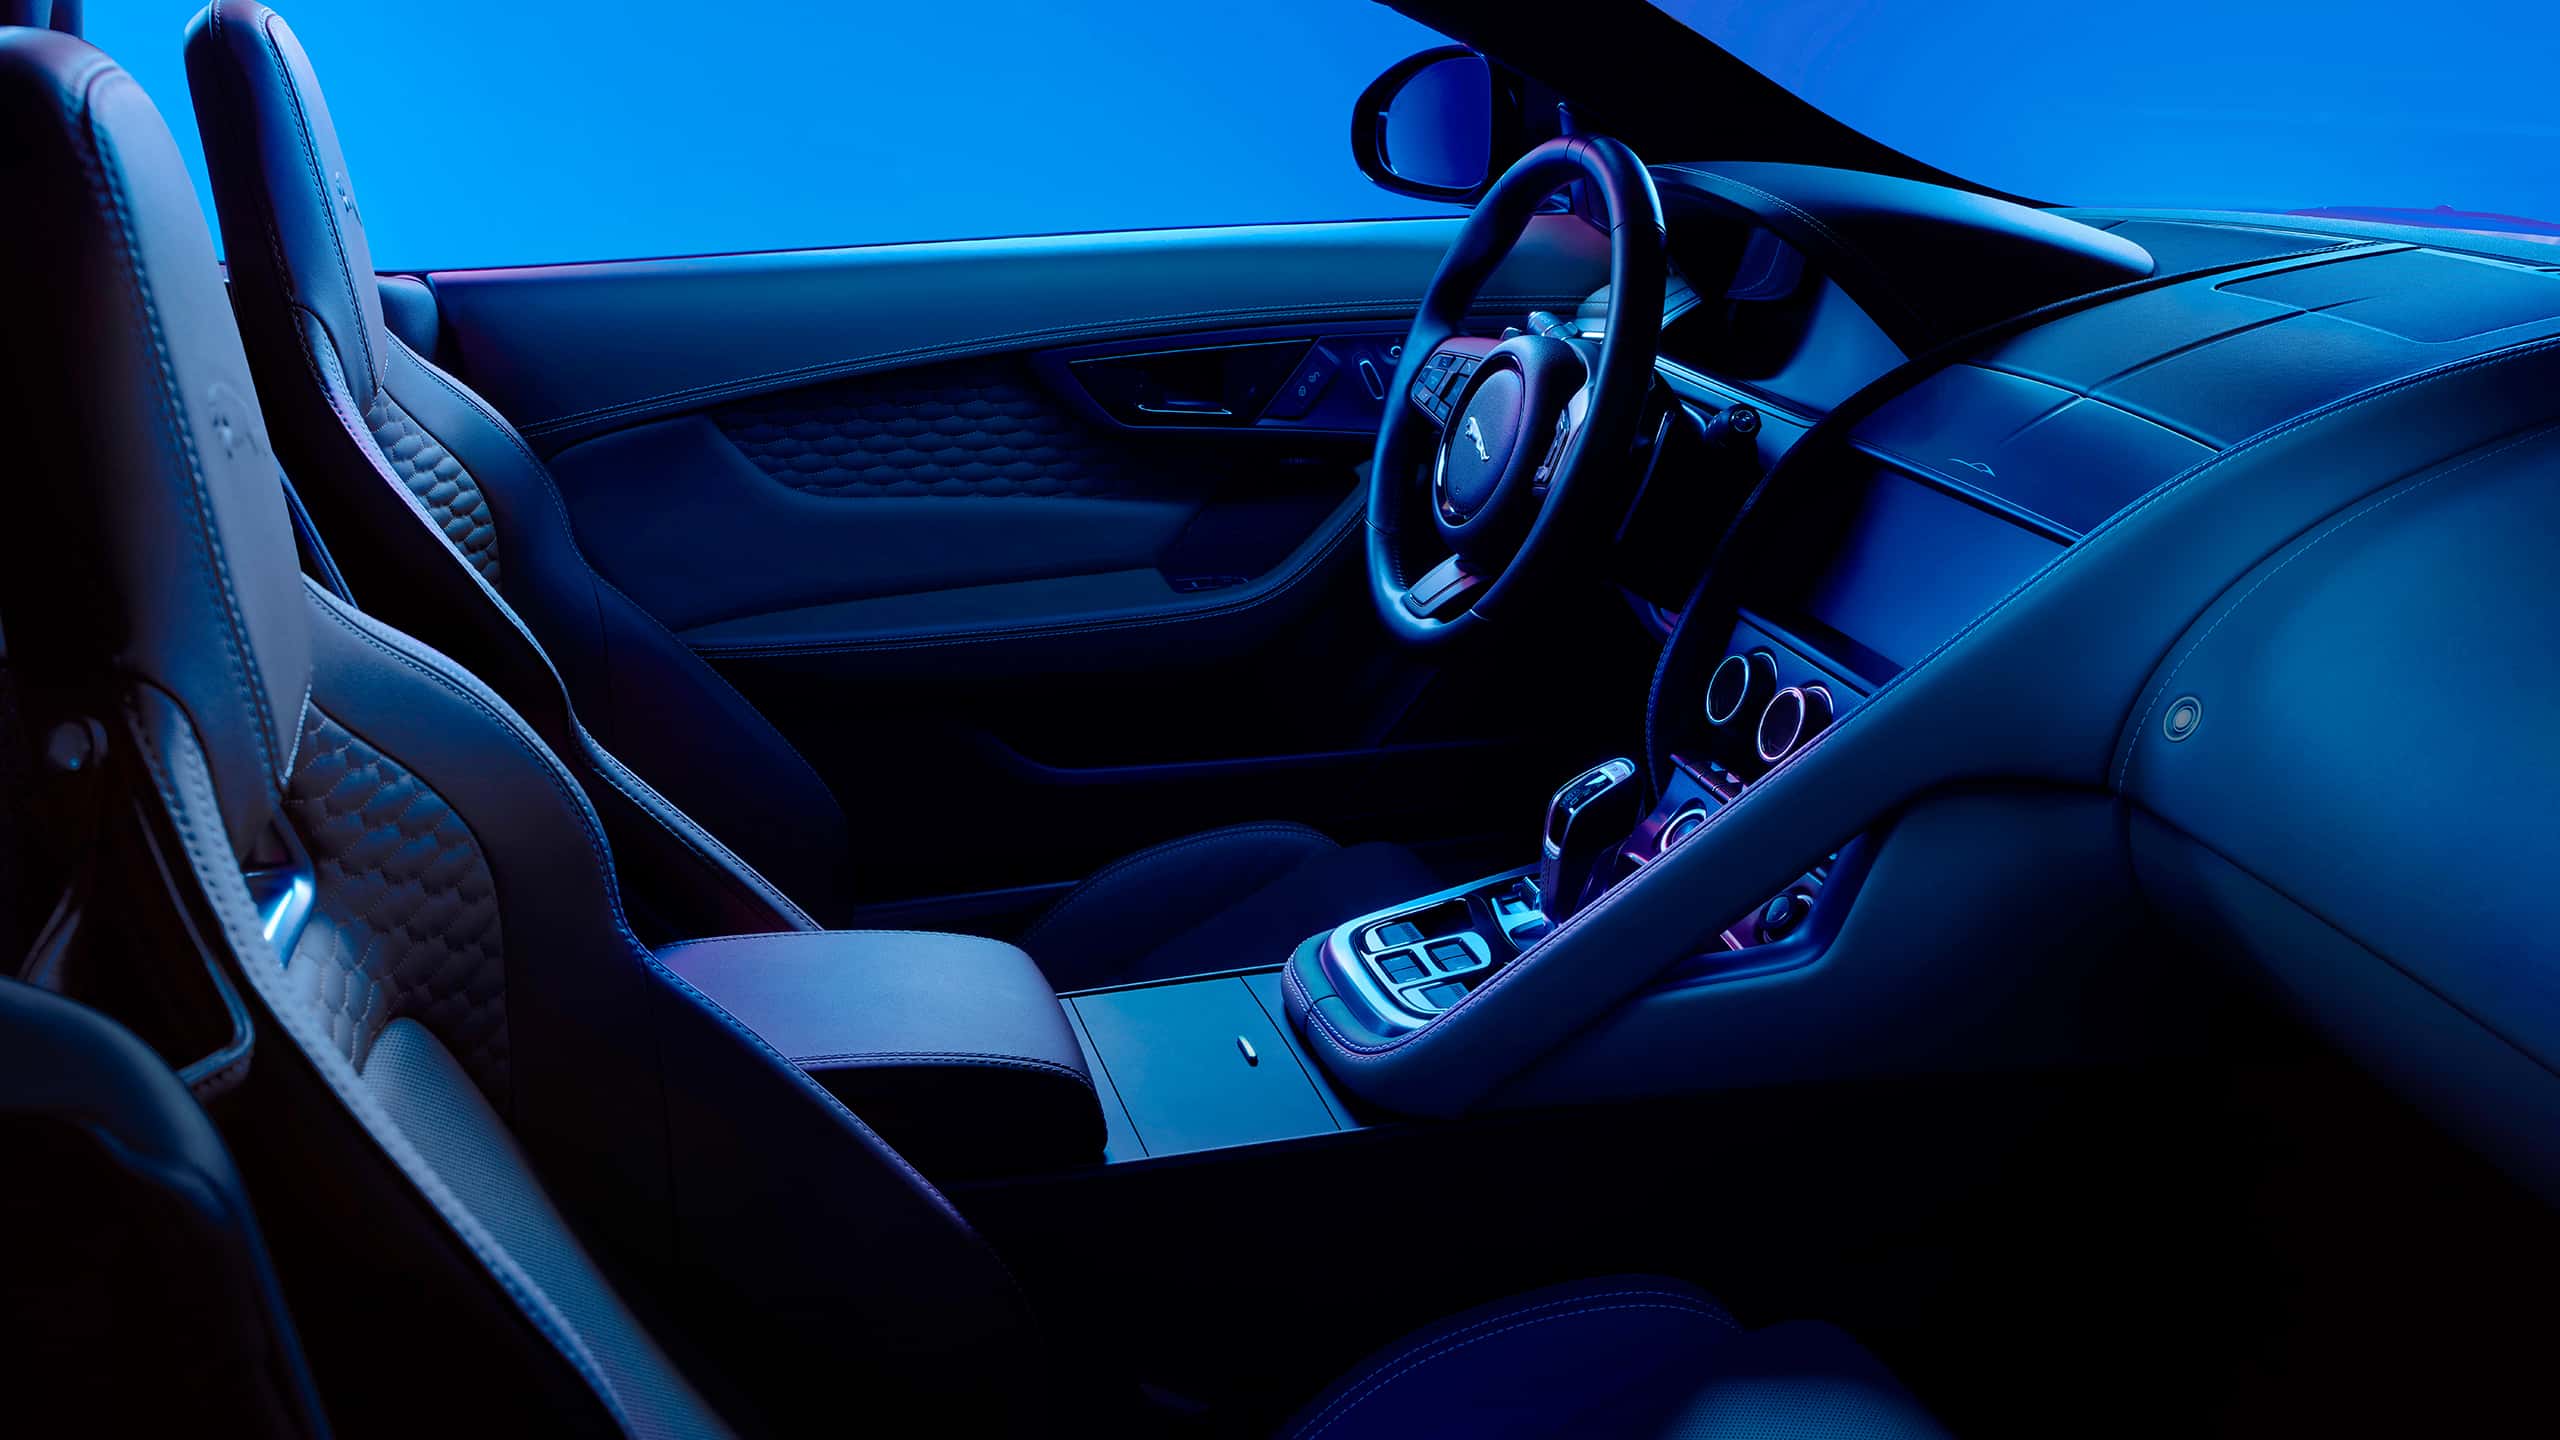 Jaguar F-Type interior and dash board